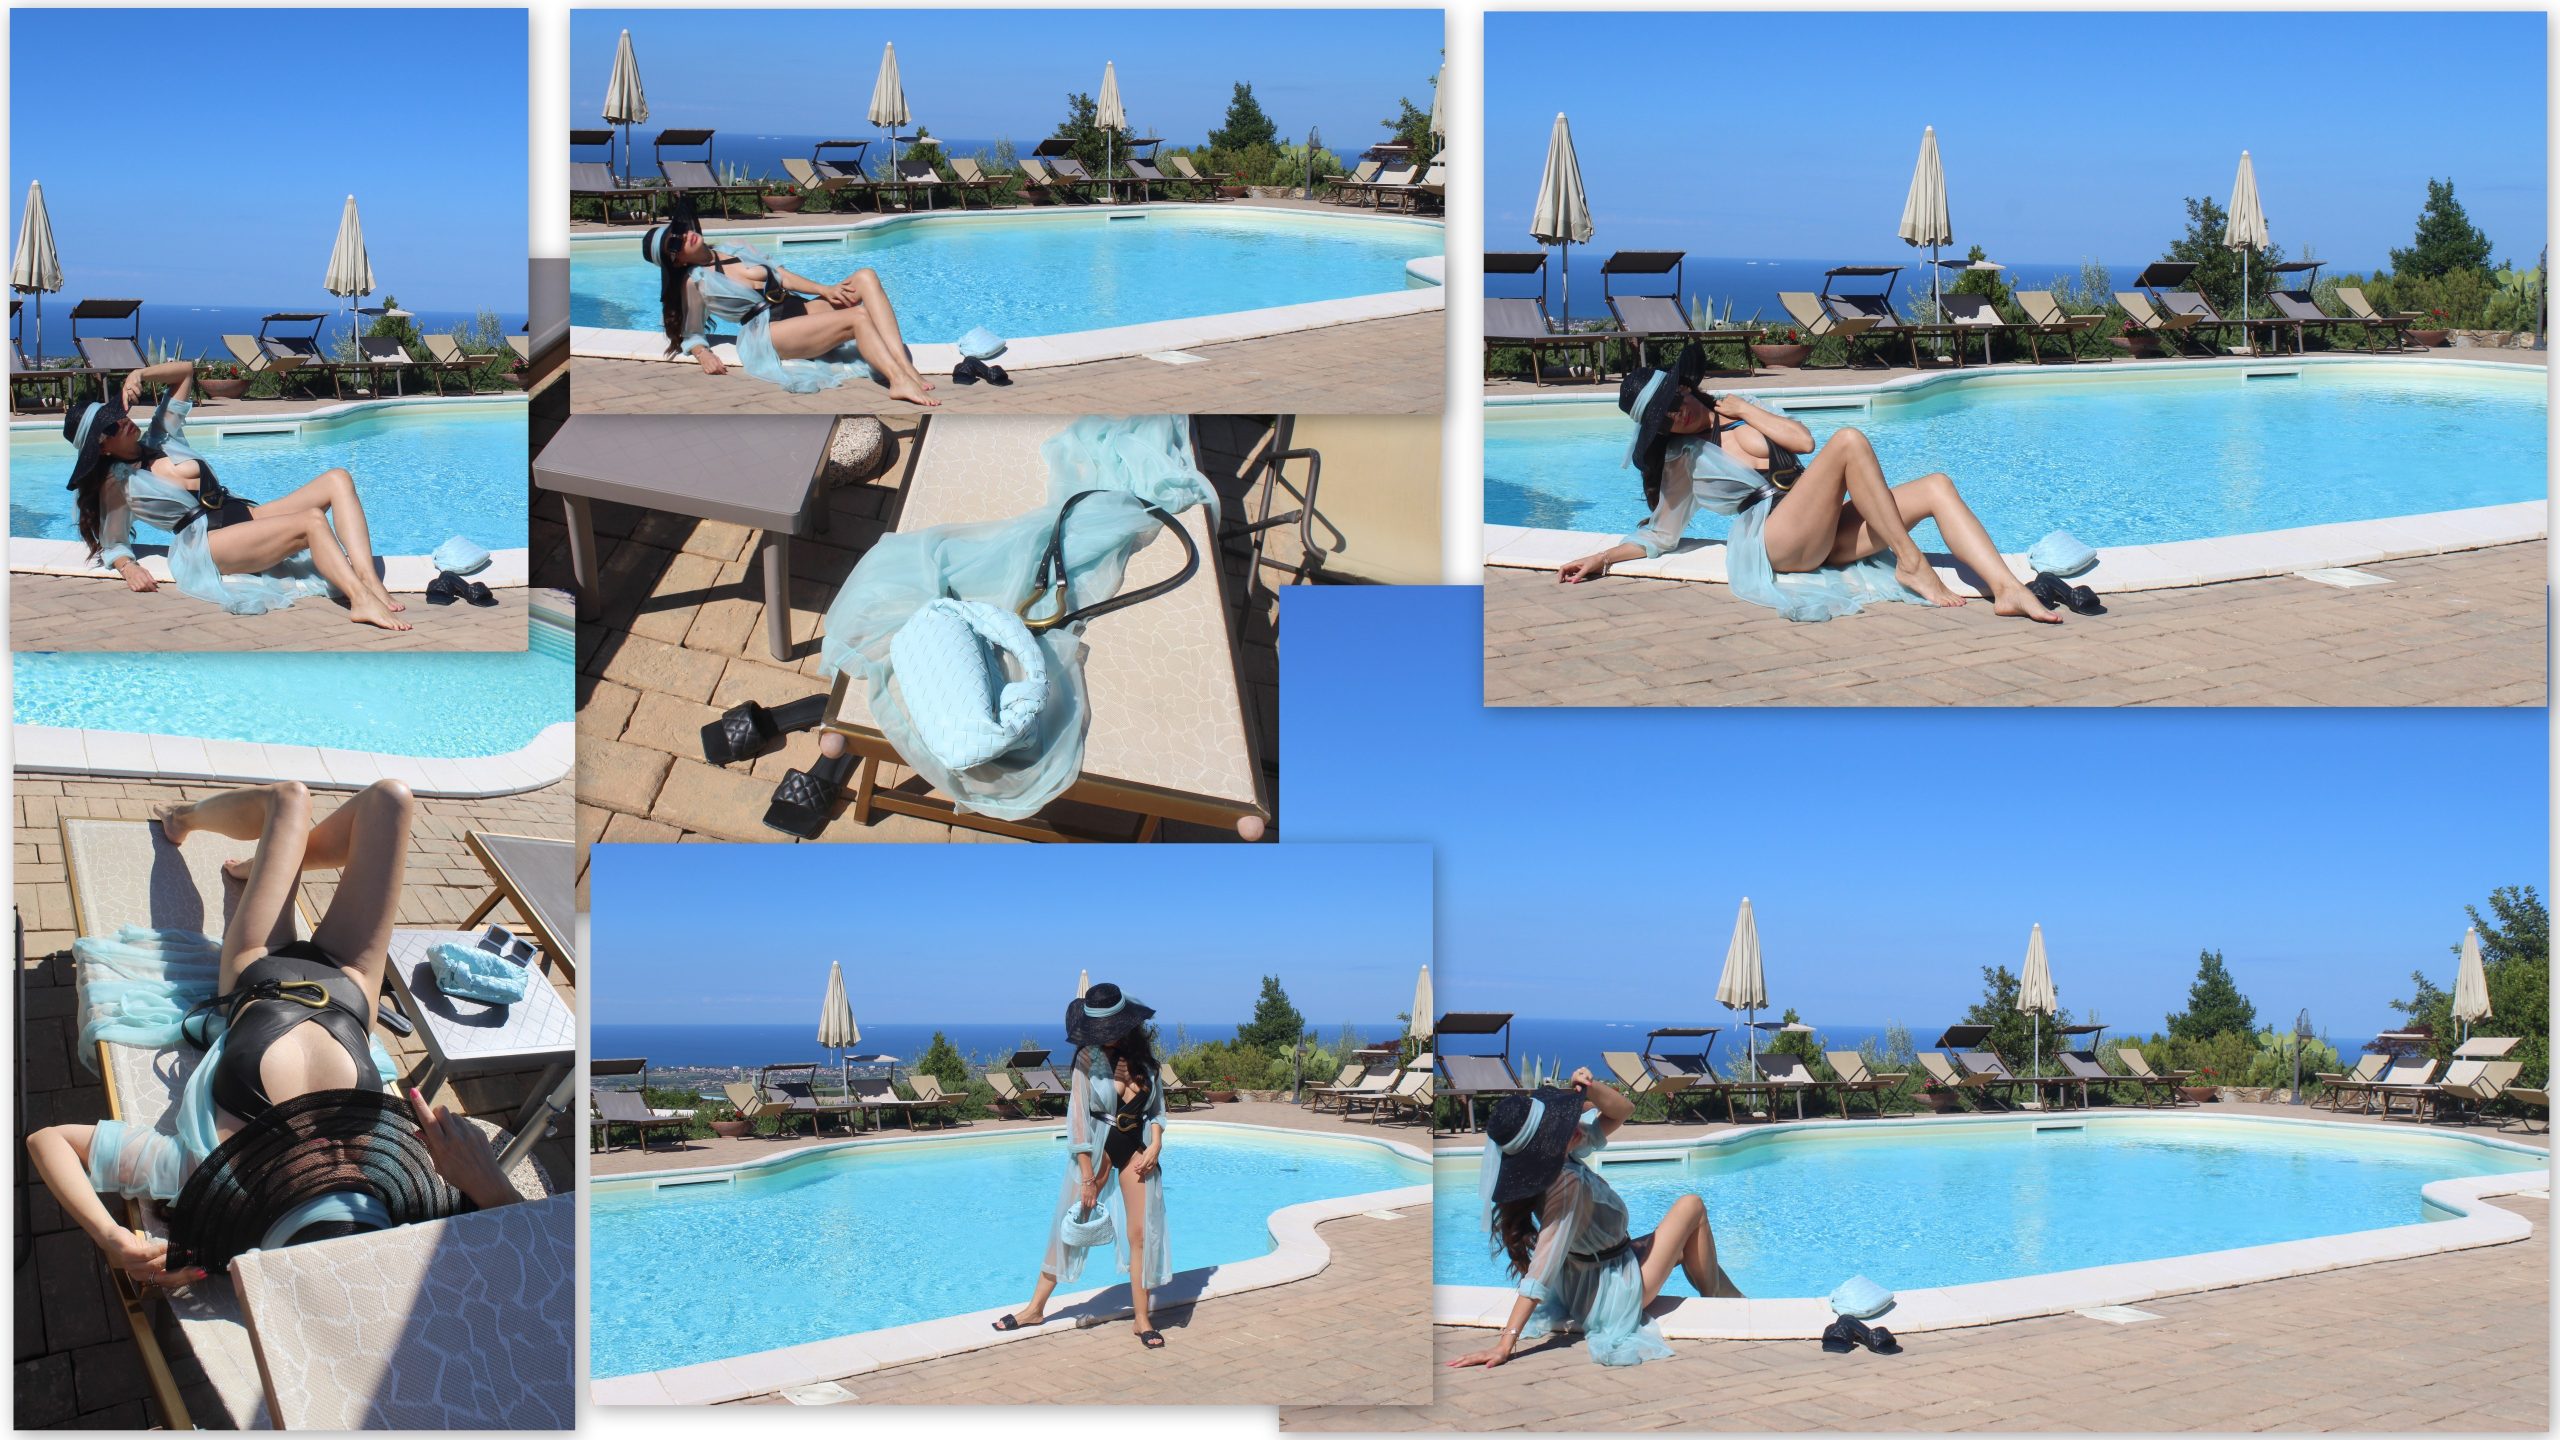 JUCCA cover up   4GIVENESS trikini   BOTTEGA VENETA accessories Paola Lauretano Influencer Blog Travel Visit Italy